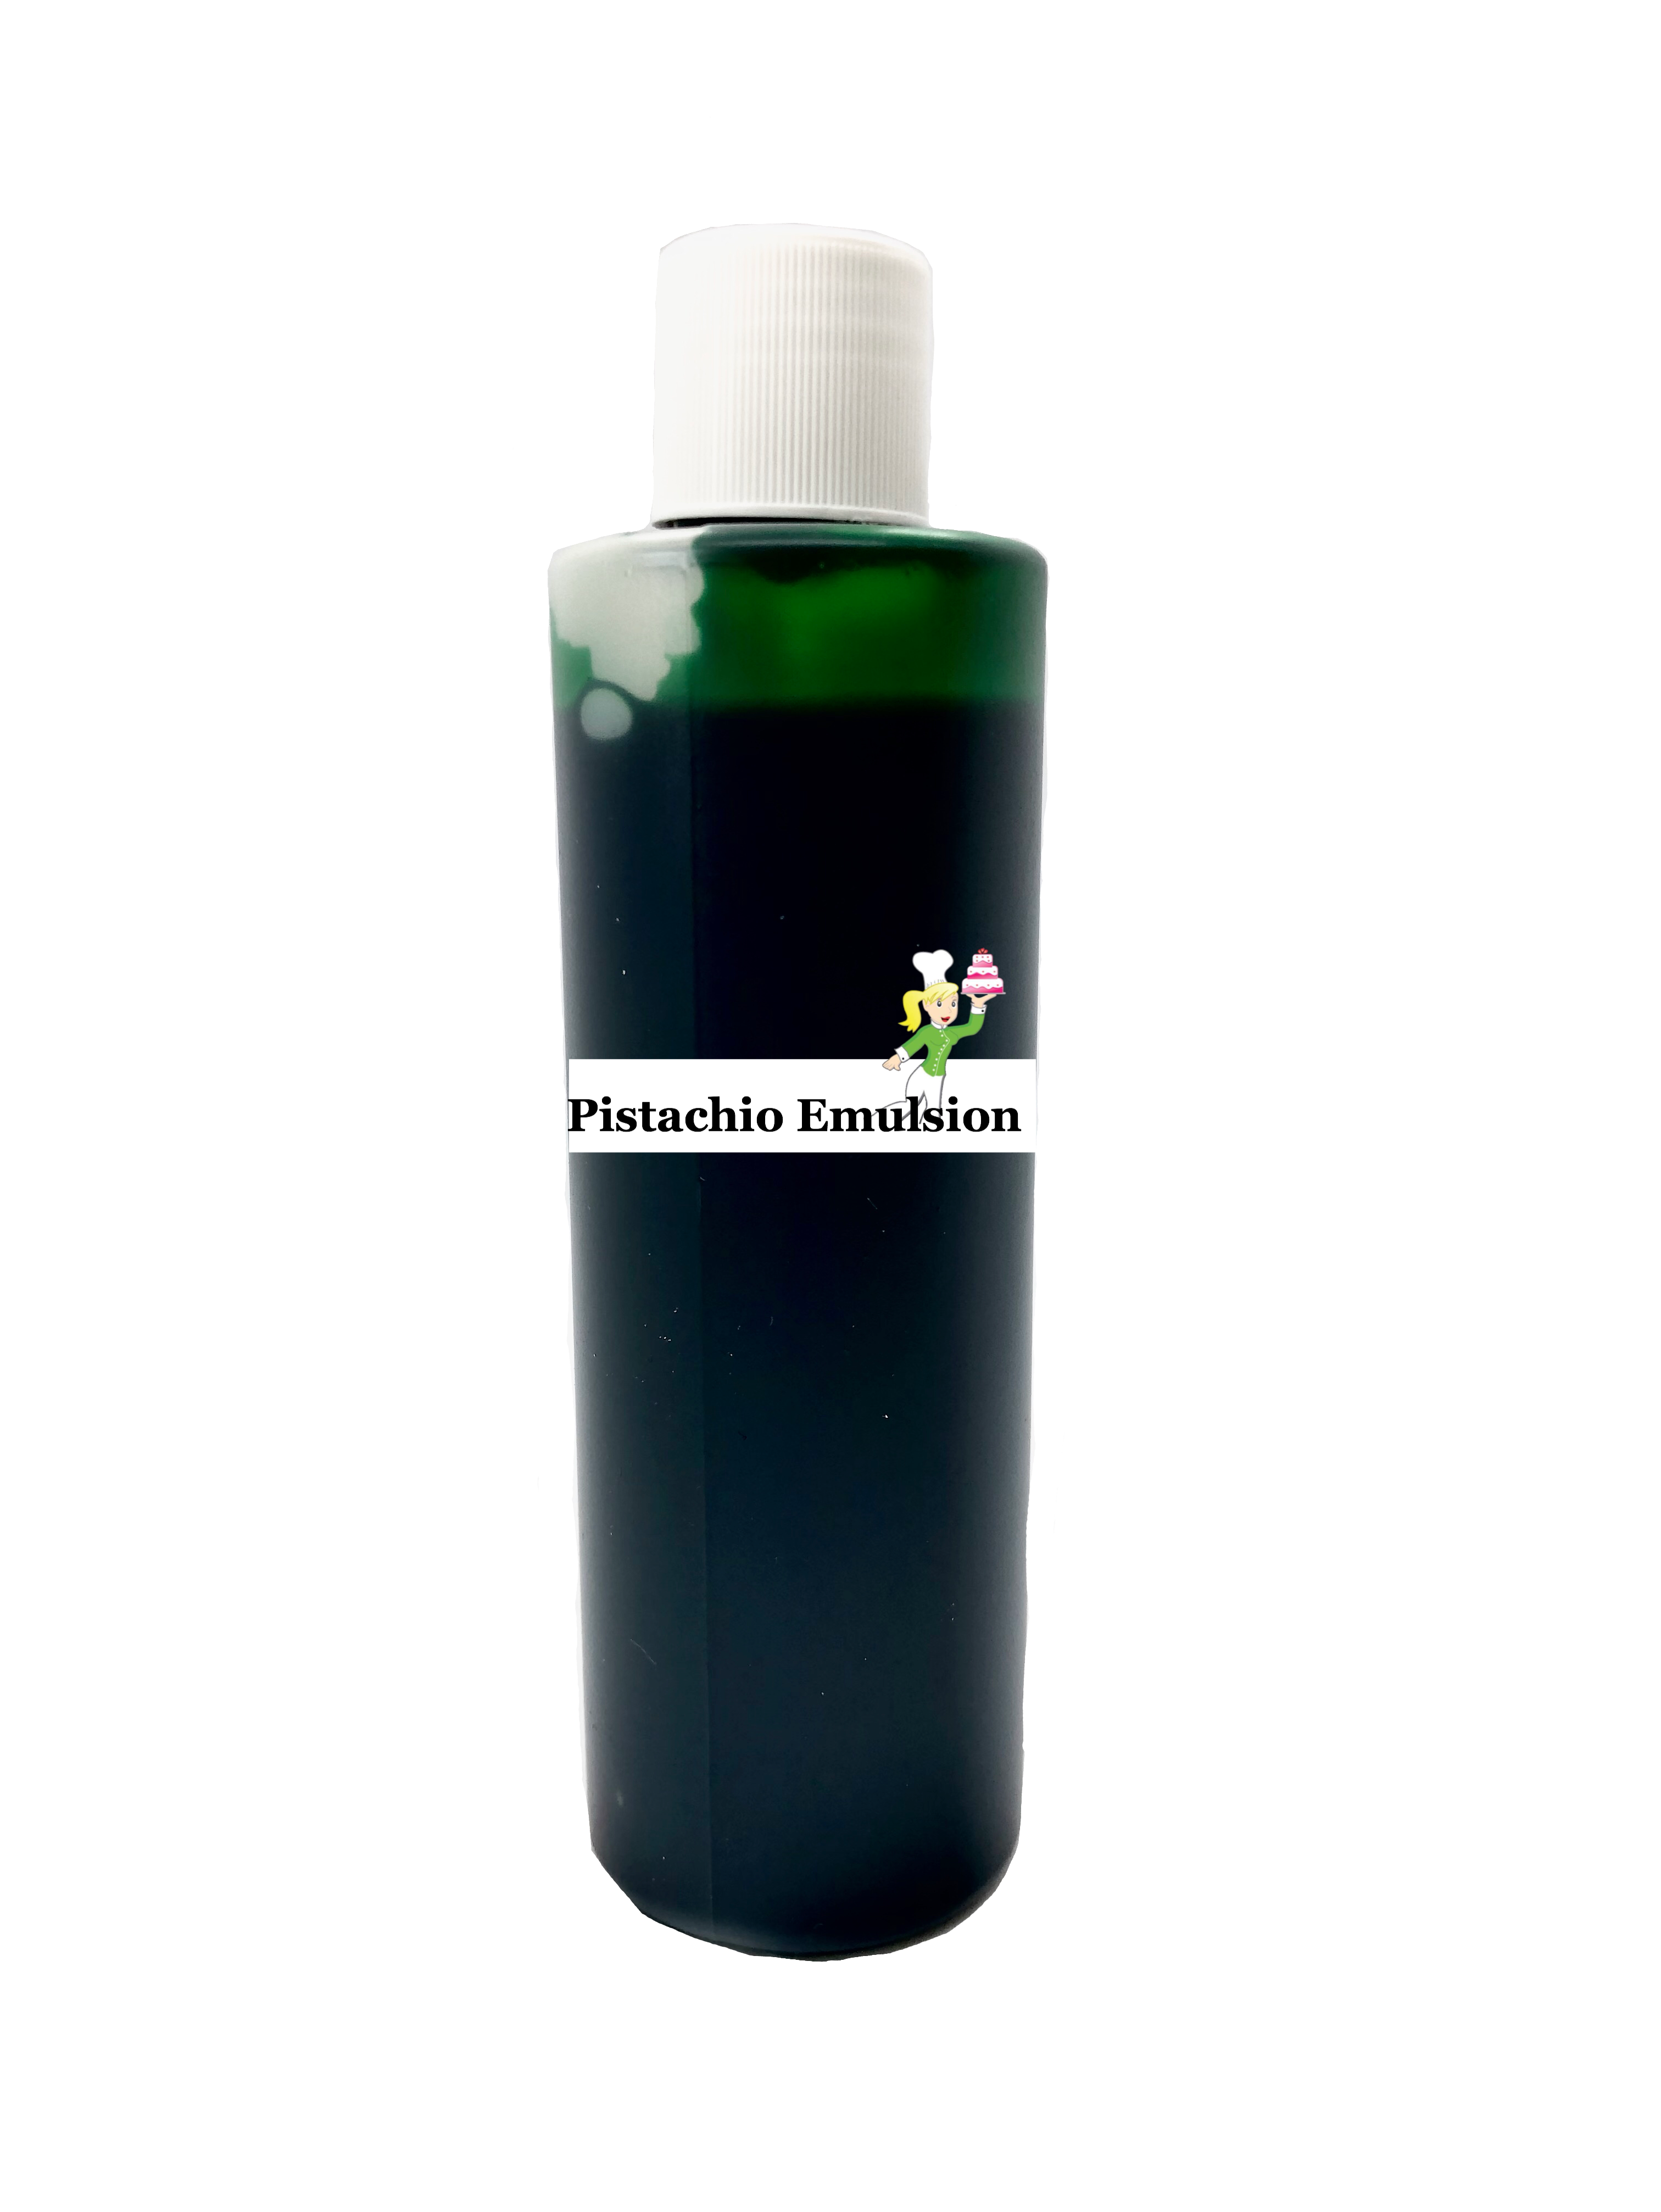 Pistachio Emulsion (+ Sizes)